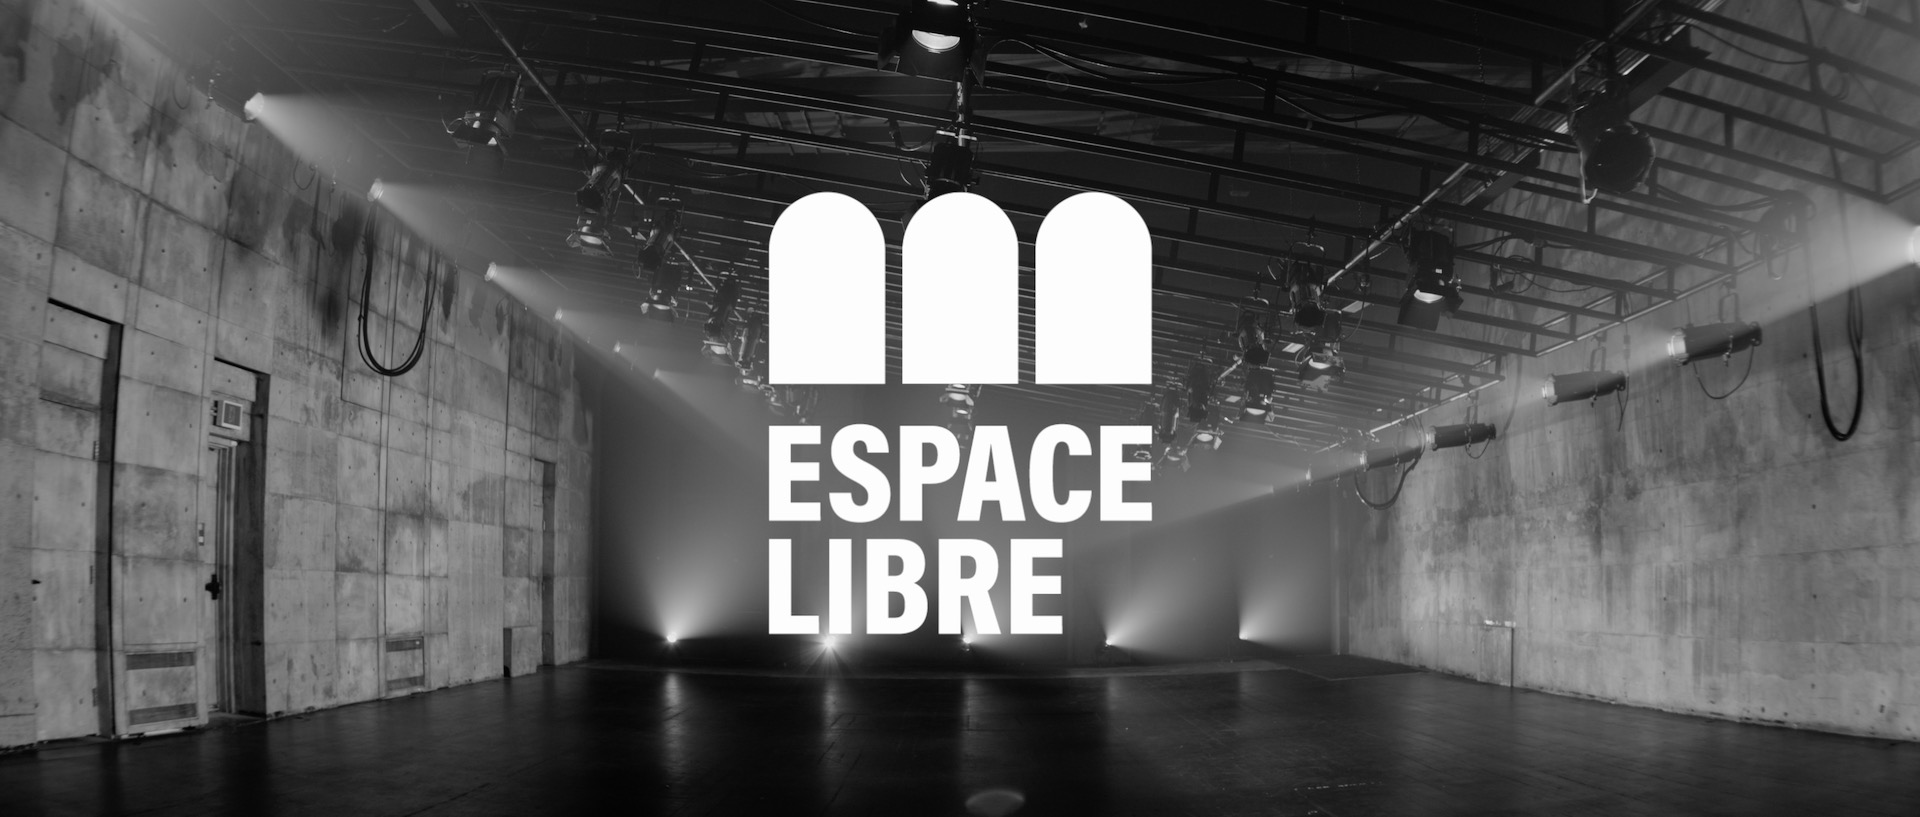 Espace Libre, Montreal | Architecture film